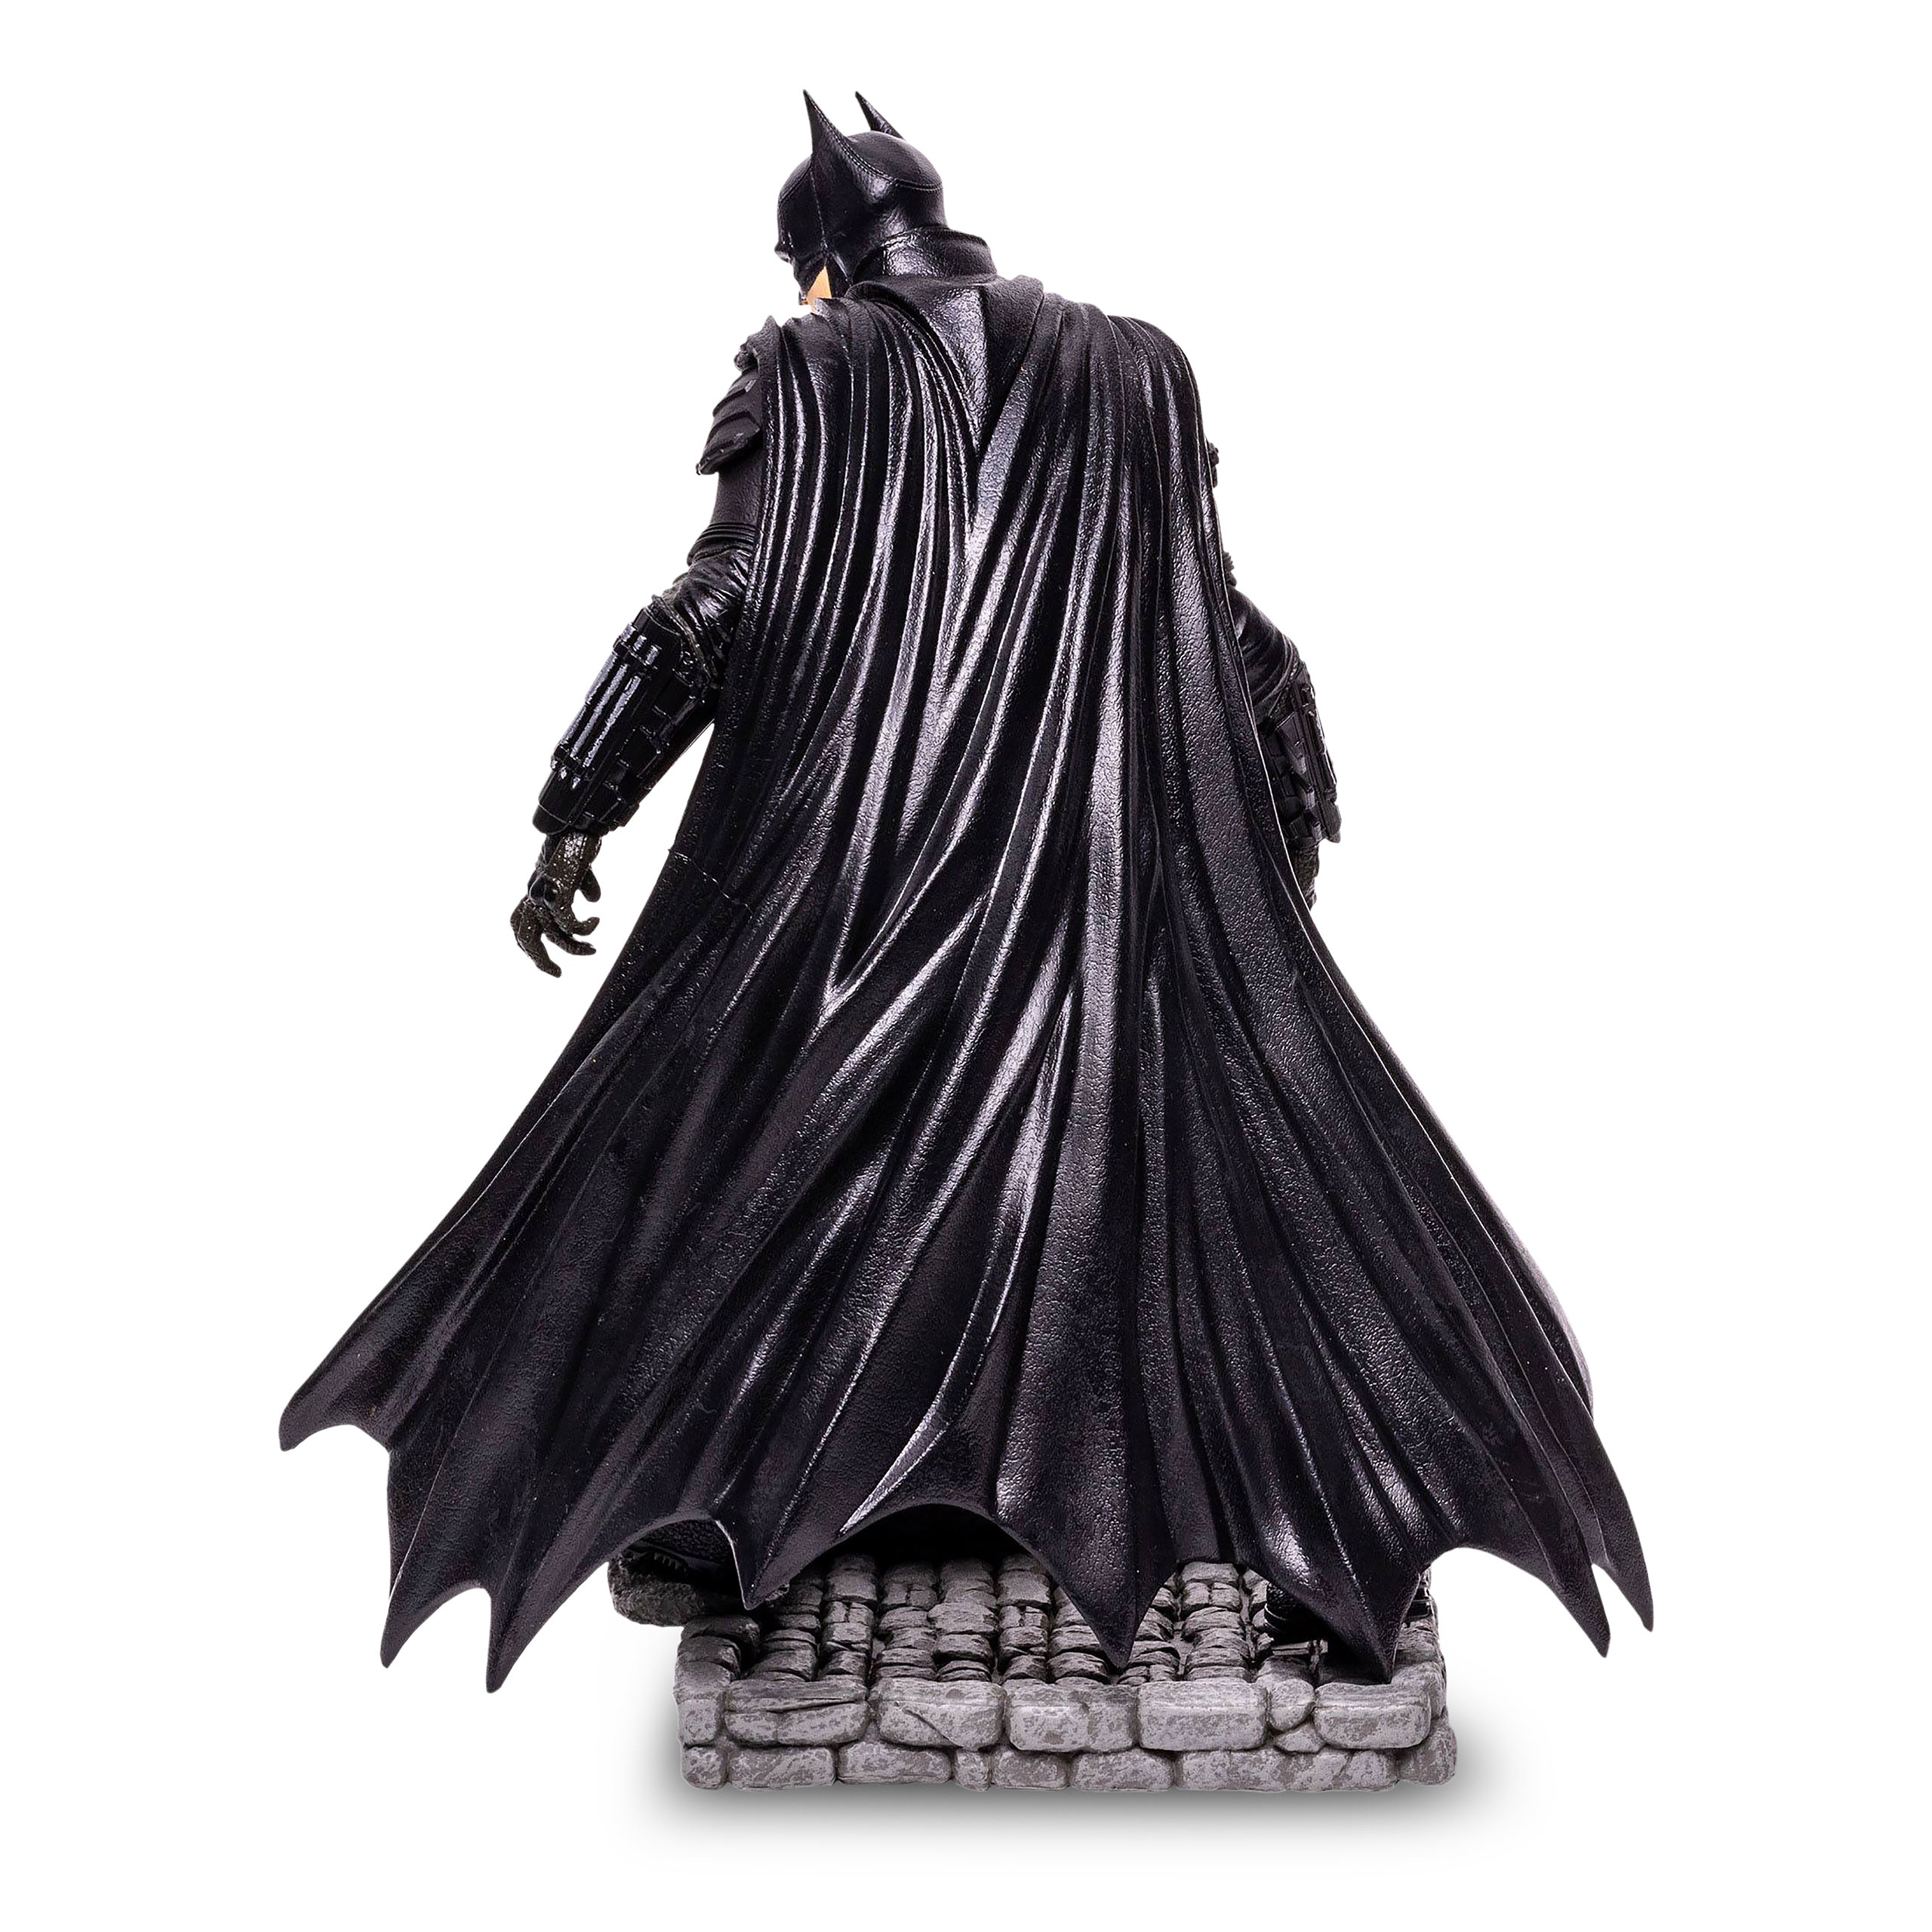 The Batman Movie Statue Version 2